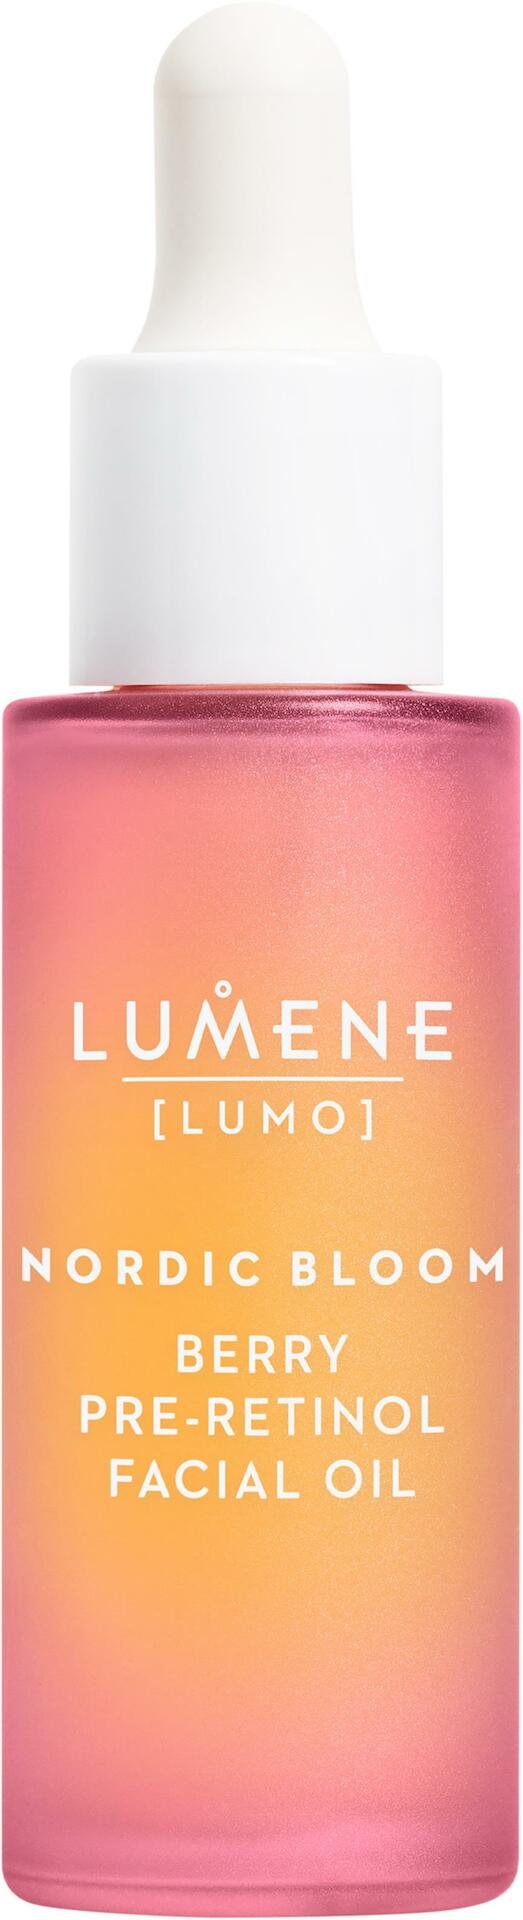 Lumene Nordic Bloom Berry Pre-Retinol Facial Oil 30ml